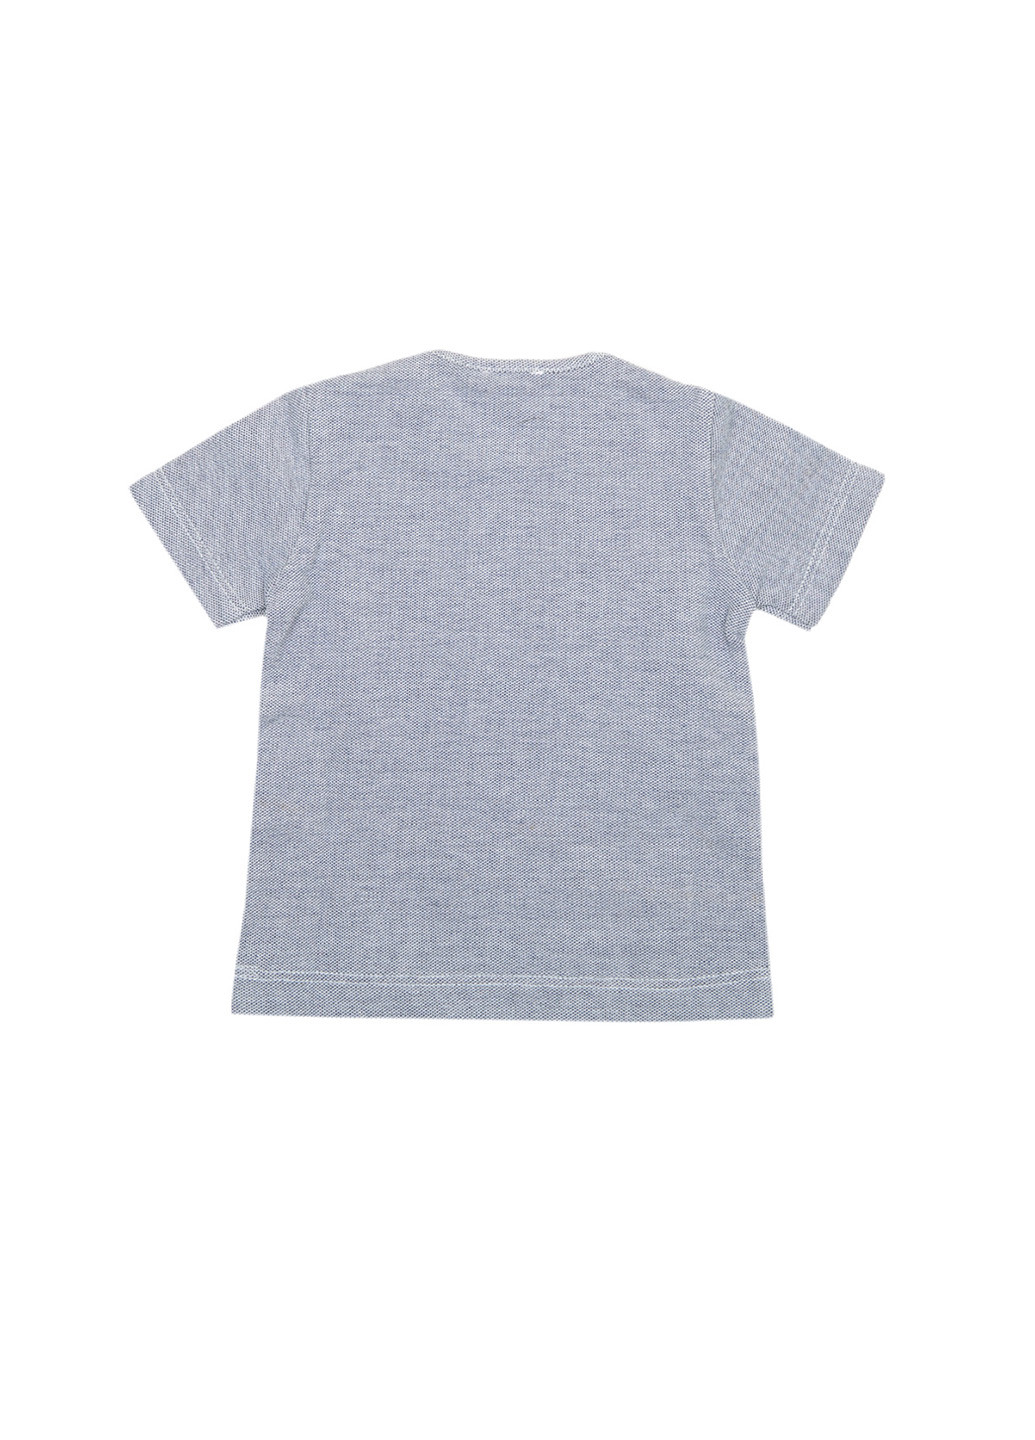 Синяя летняя футболка с коротким рукавом Juppala